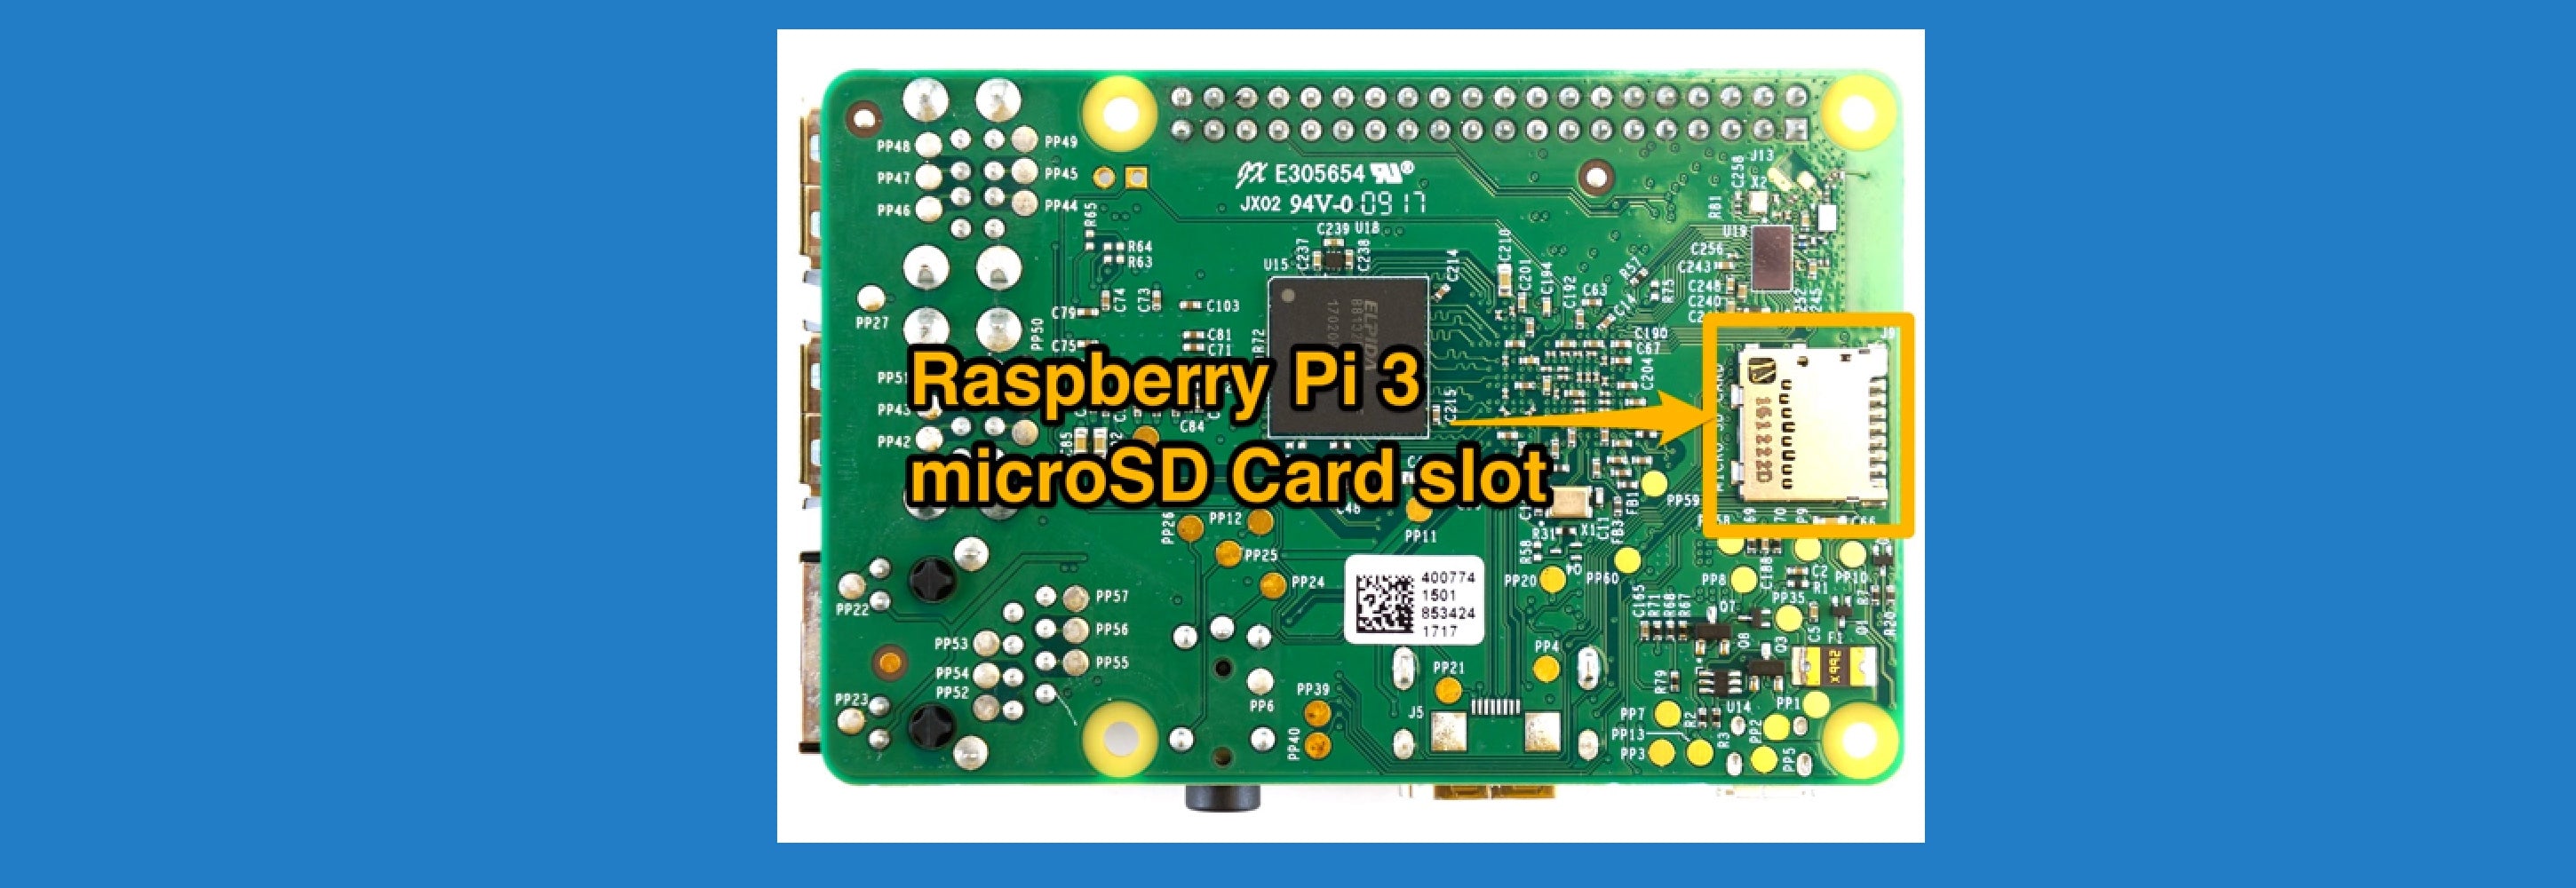 Does the Raspberry Pi 3 Use a Spring Loaded MicroSD Card Tray like the V2?